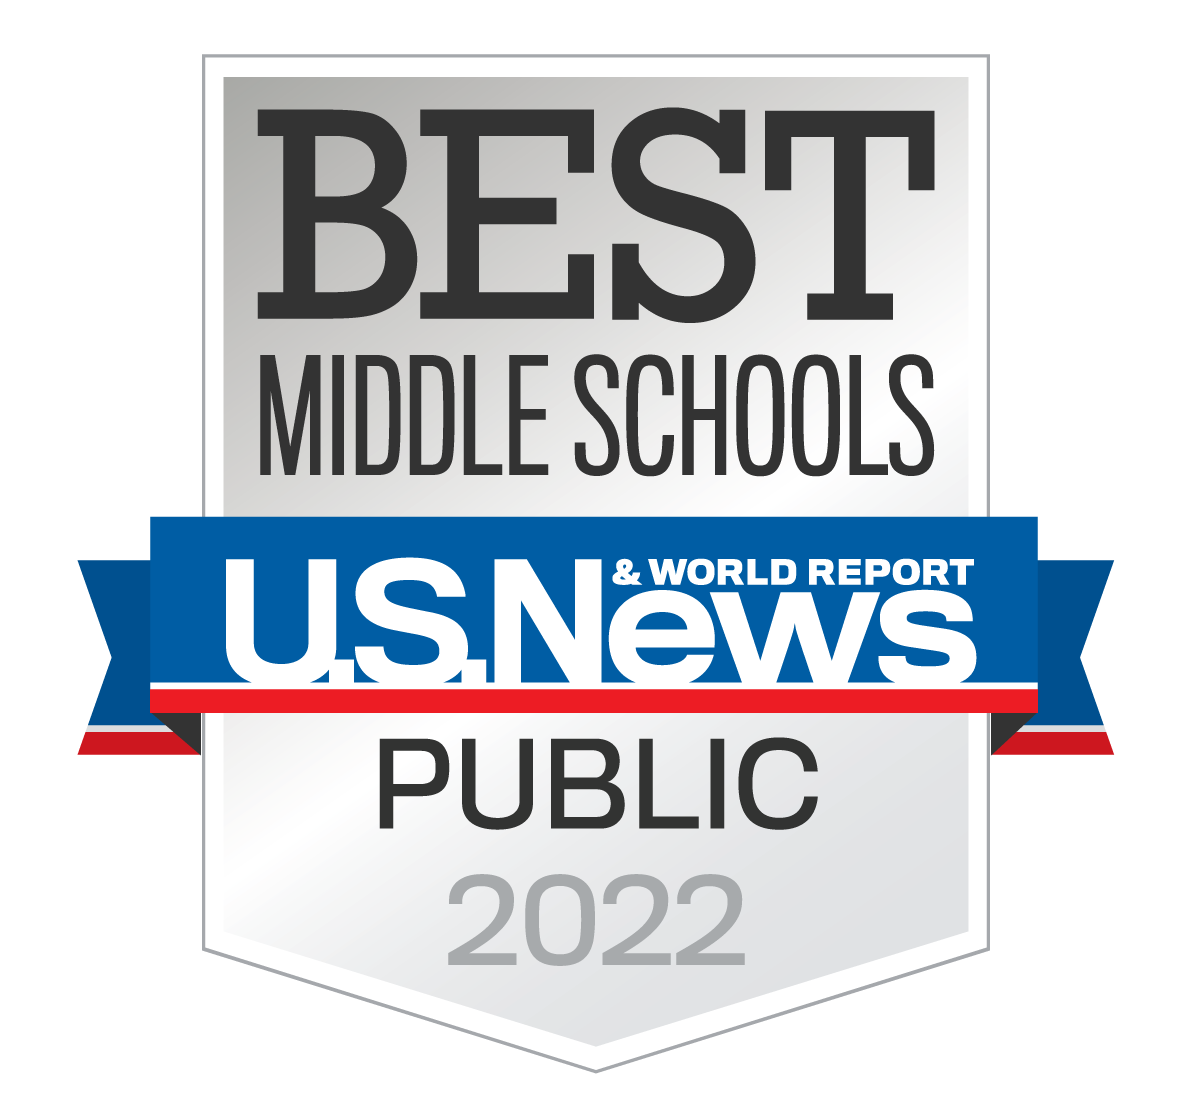 Best Middle School US News & Report Public 2022